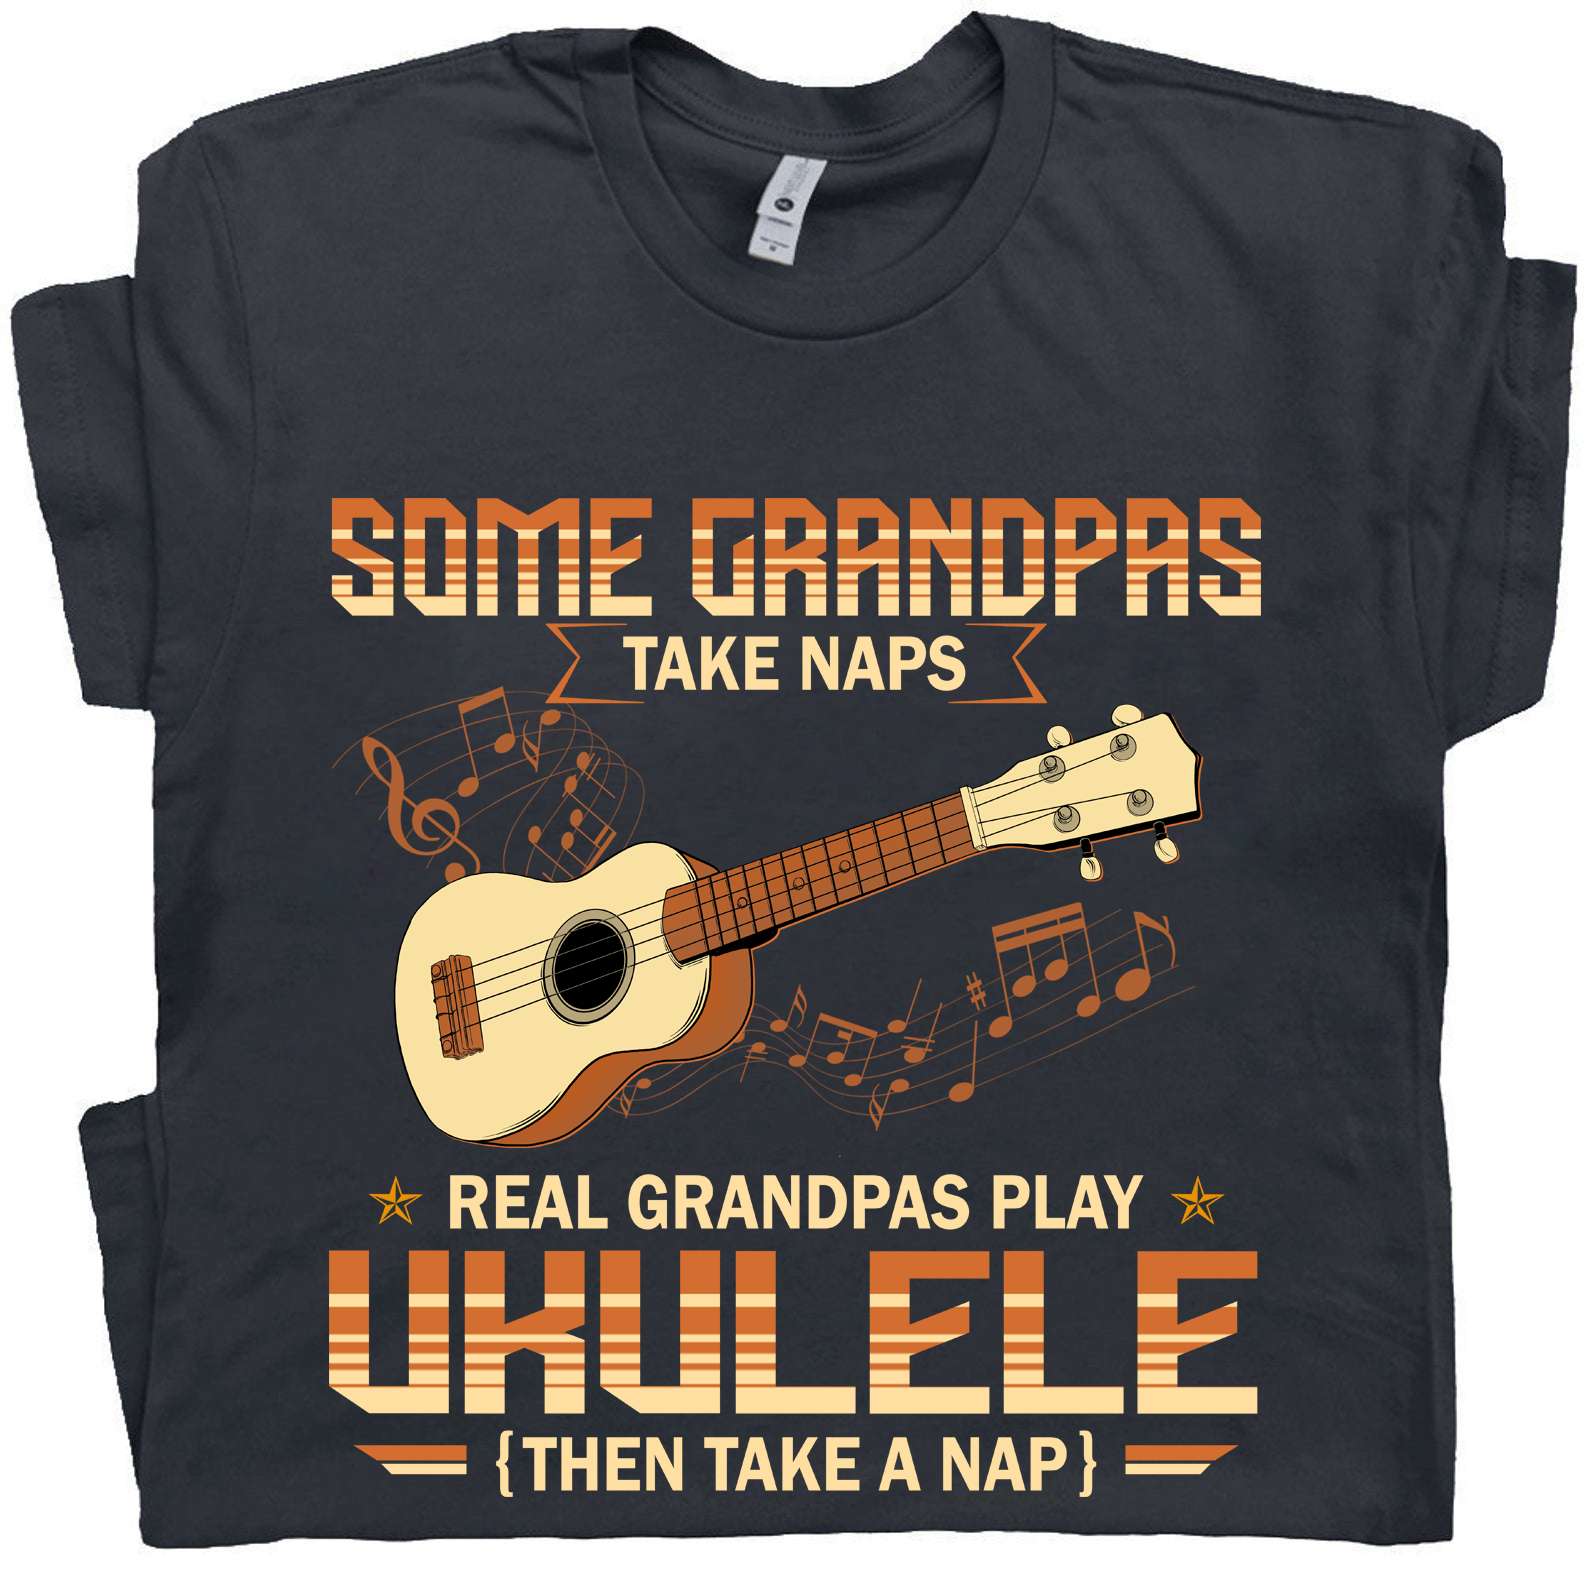 Some grandpas take naps, real grandpas play ukulele - Love playing ukulele